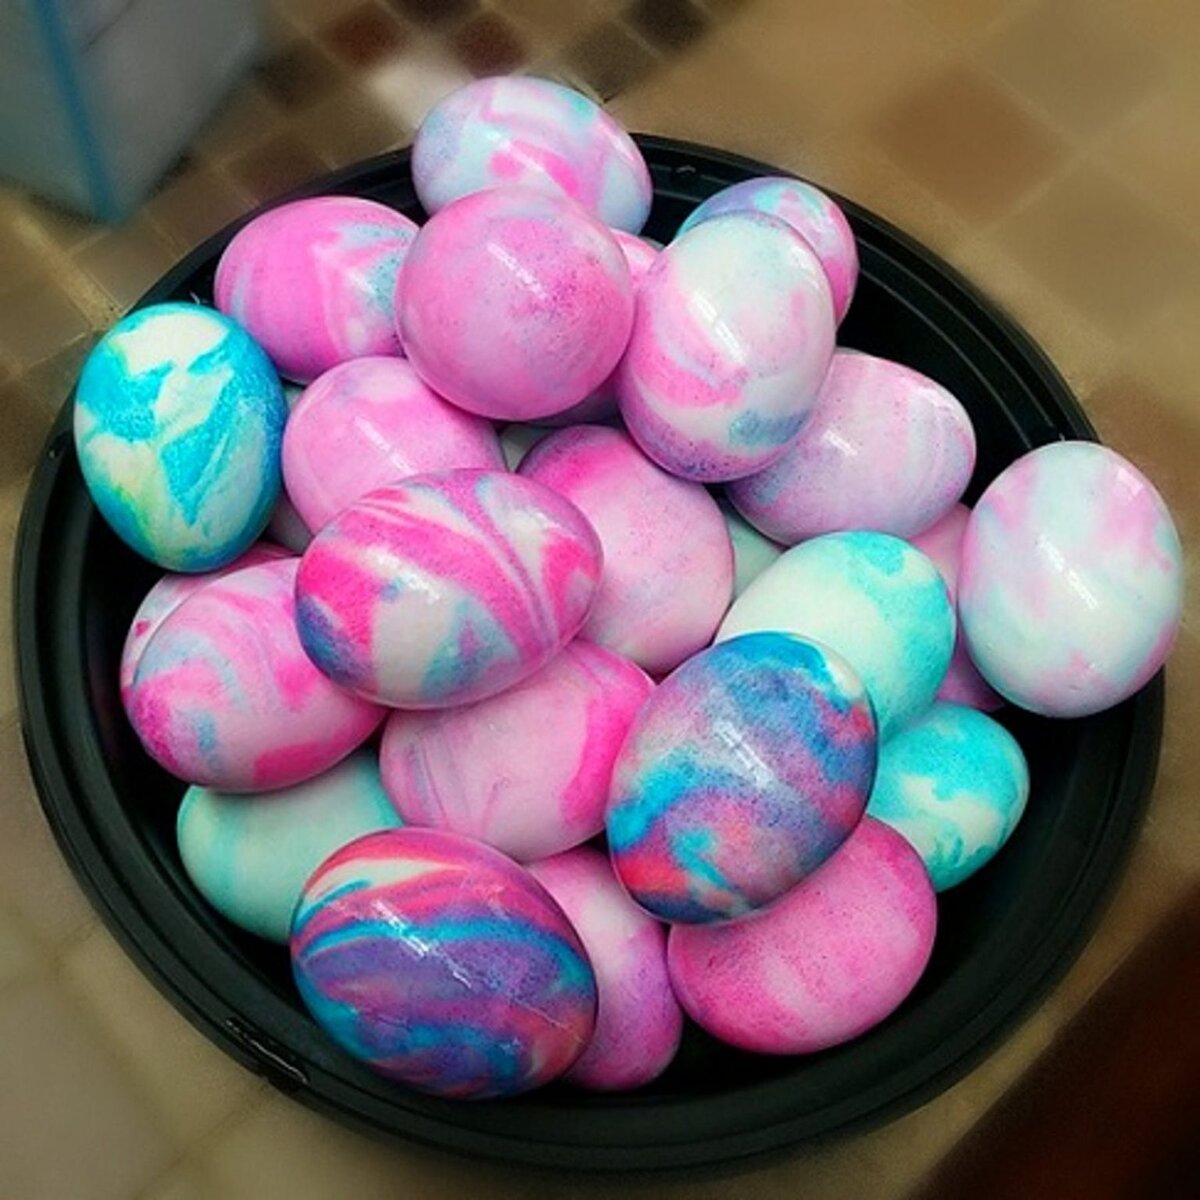 Каким цветом покрасить яйца